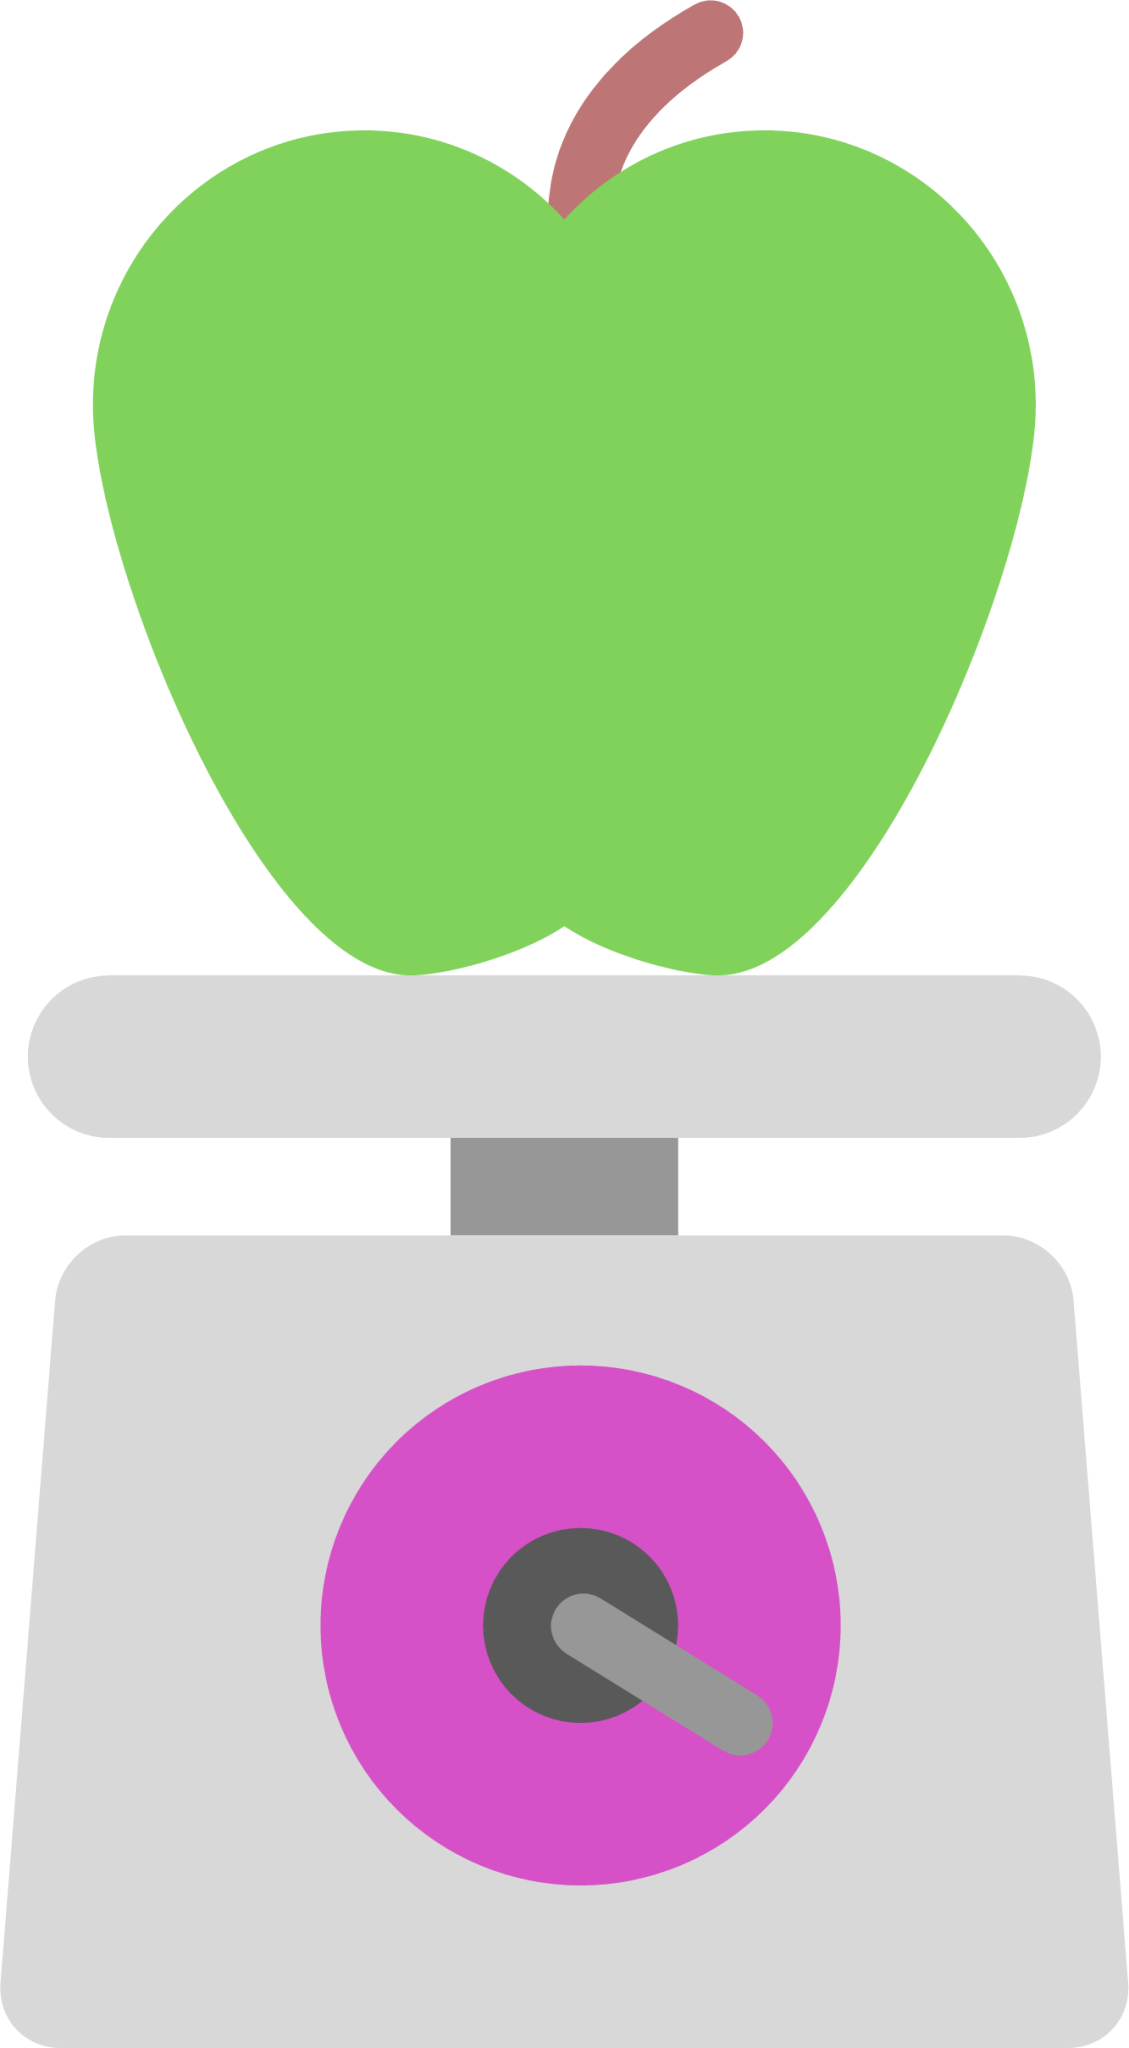 fruit control icon